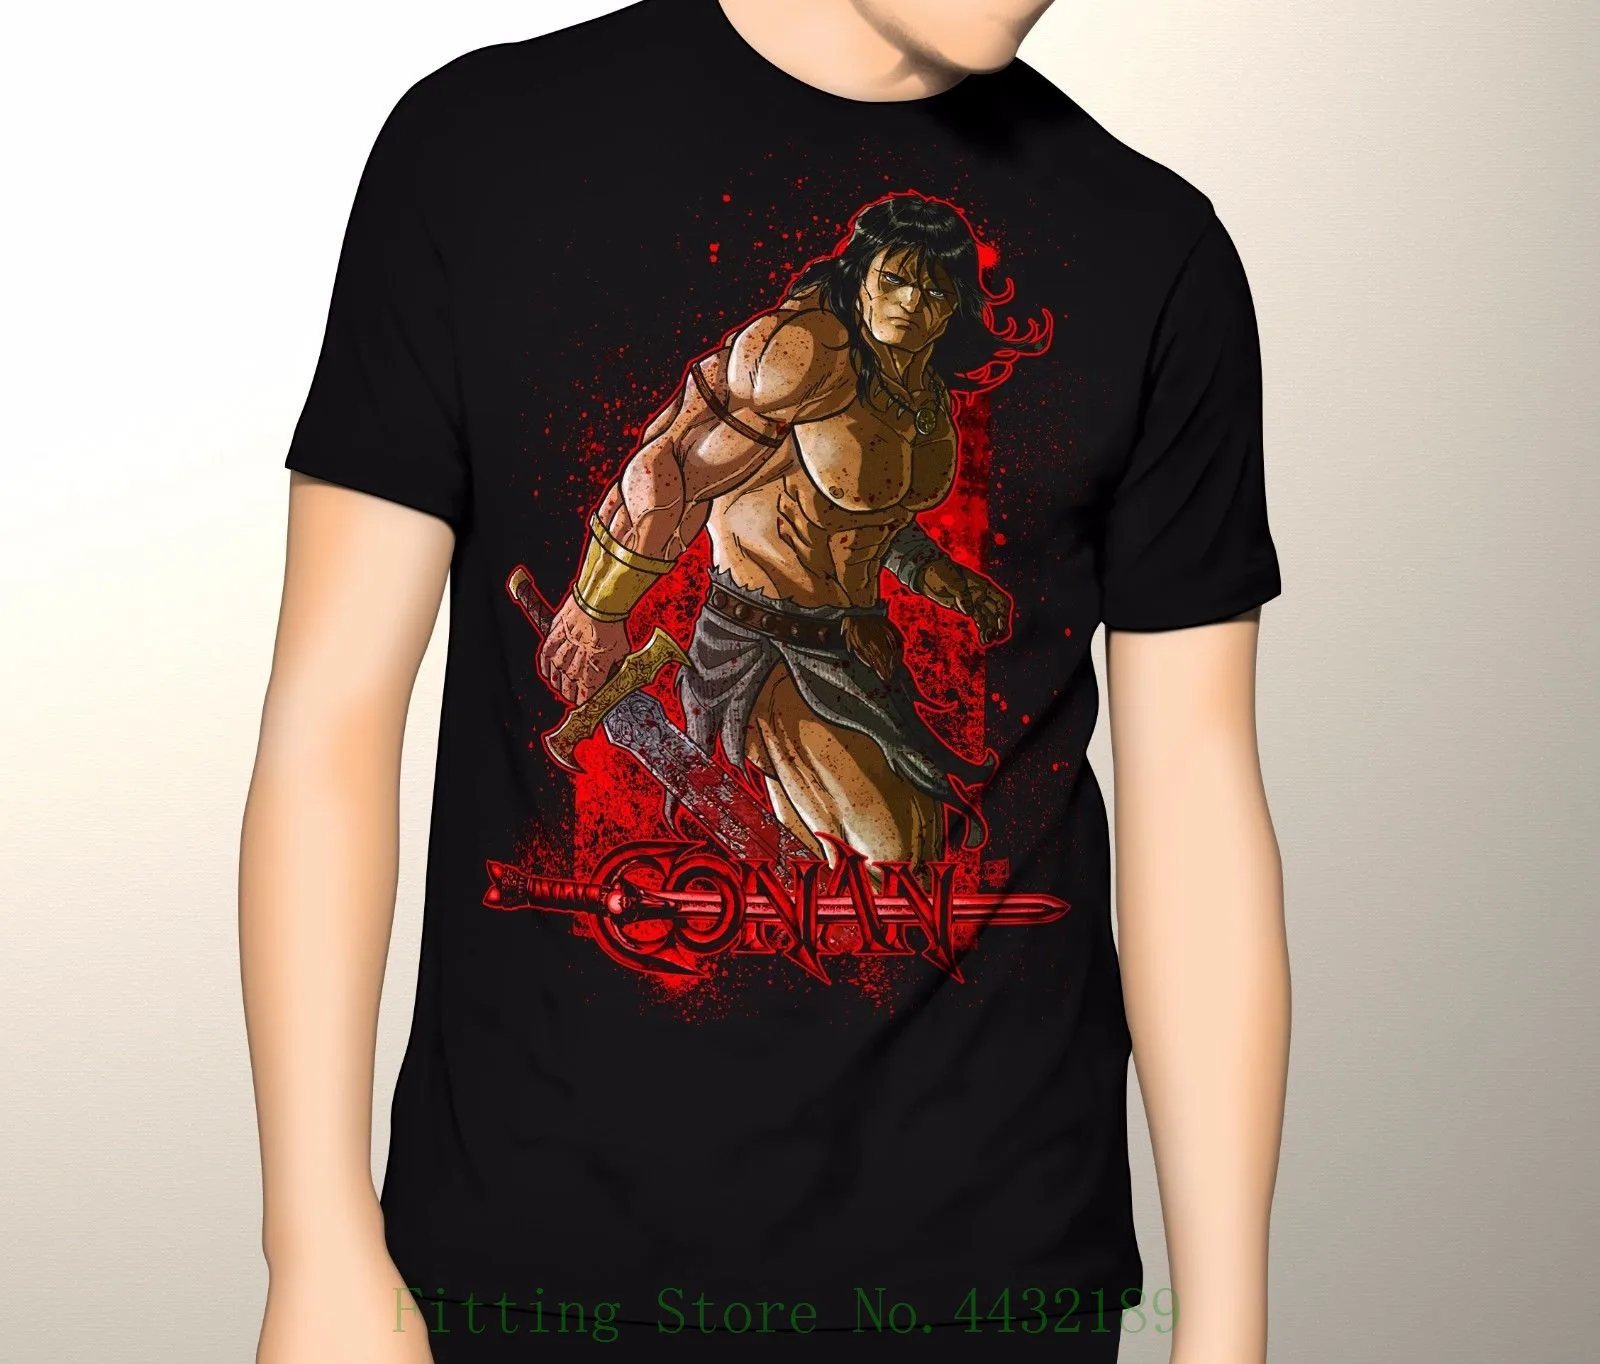 Conan The Barbarian Shirt Premium Graphic T Shirt S 5xl